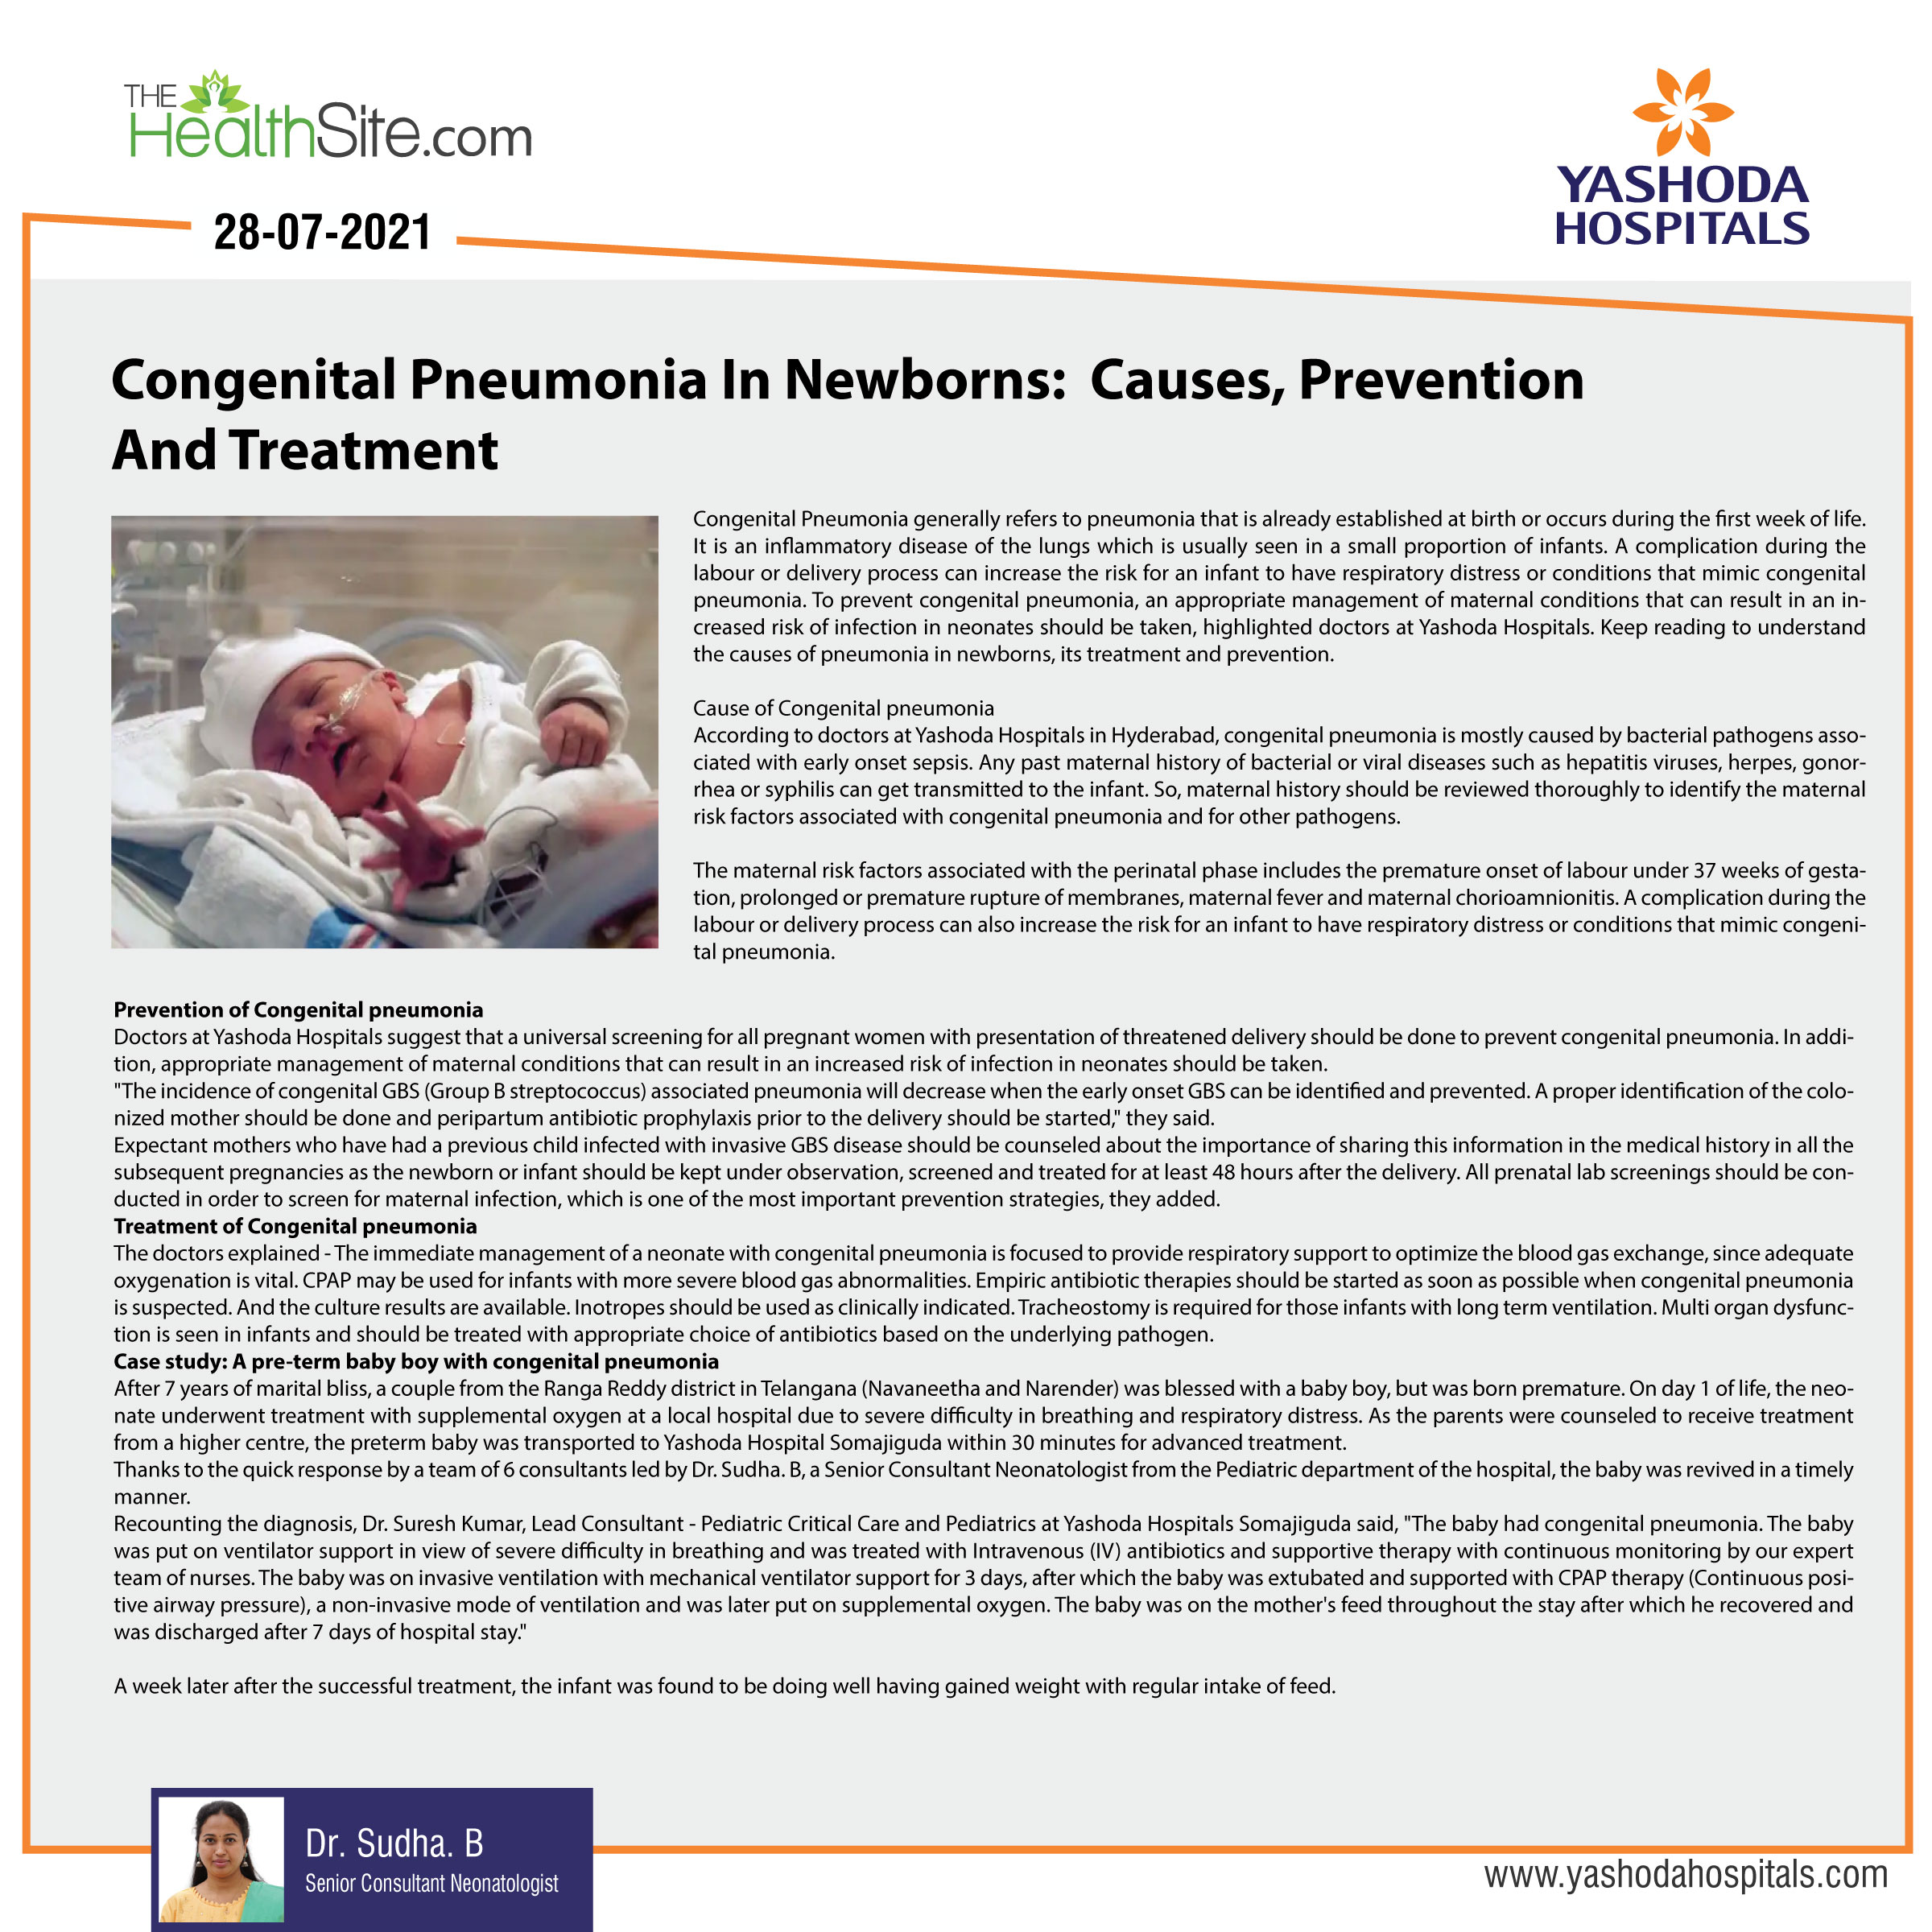 Congenital Pneumonia in newborn